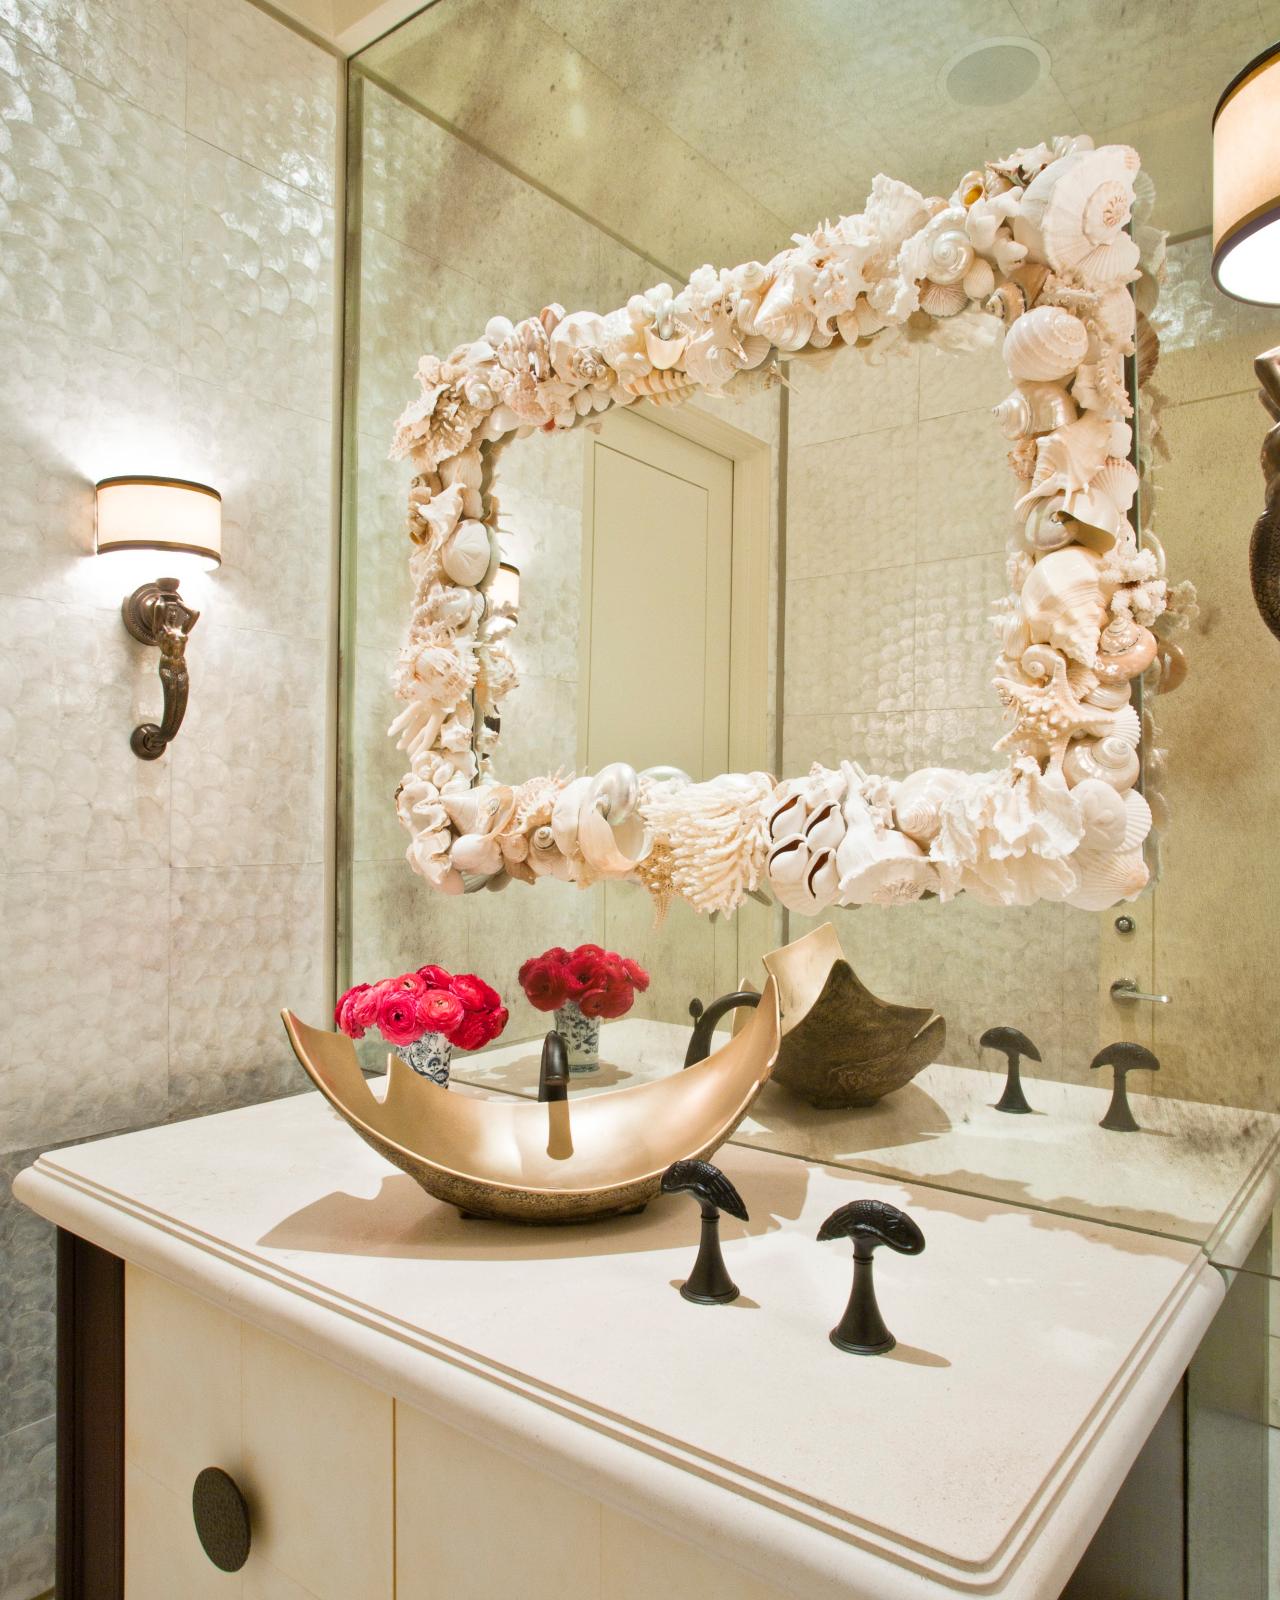 Contemporary Metallic Bathroom With Seashell Mirror | HGTV